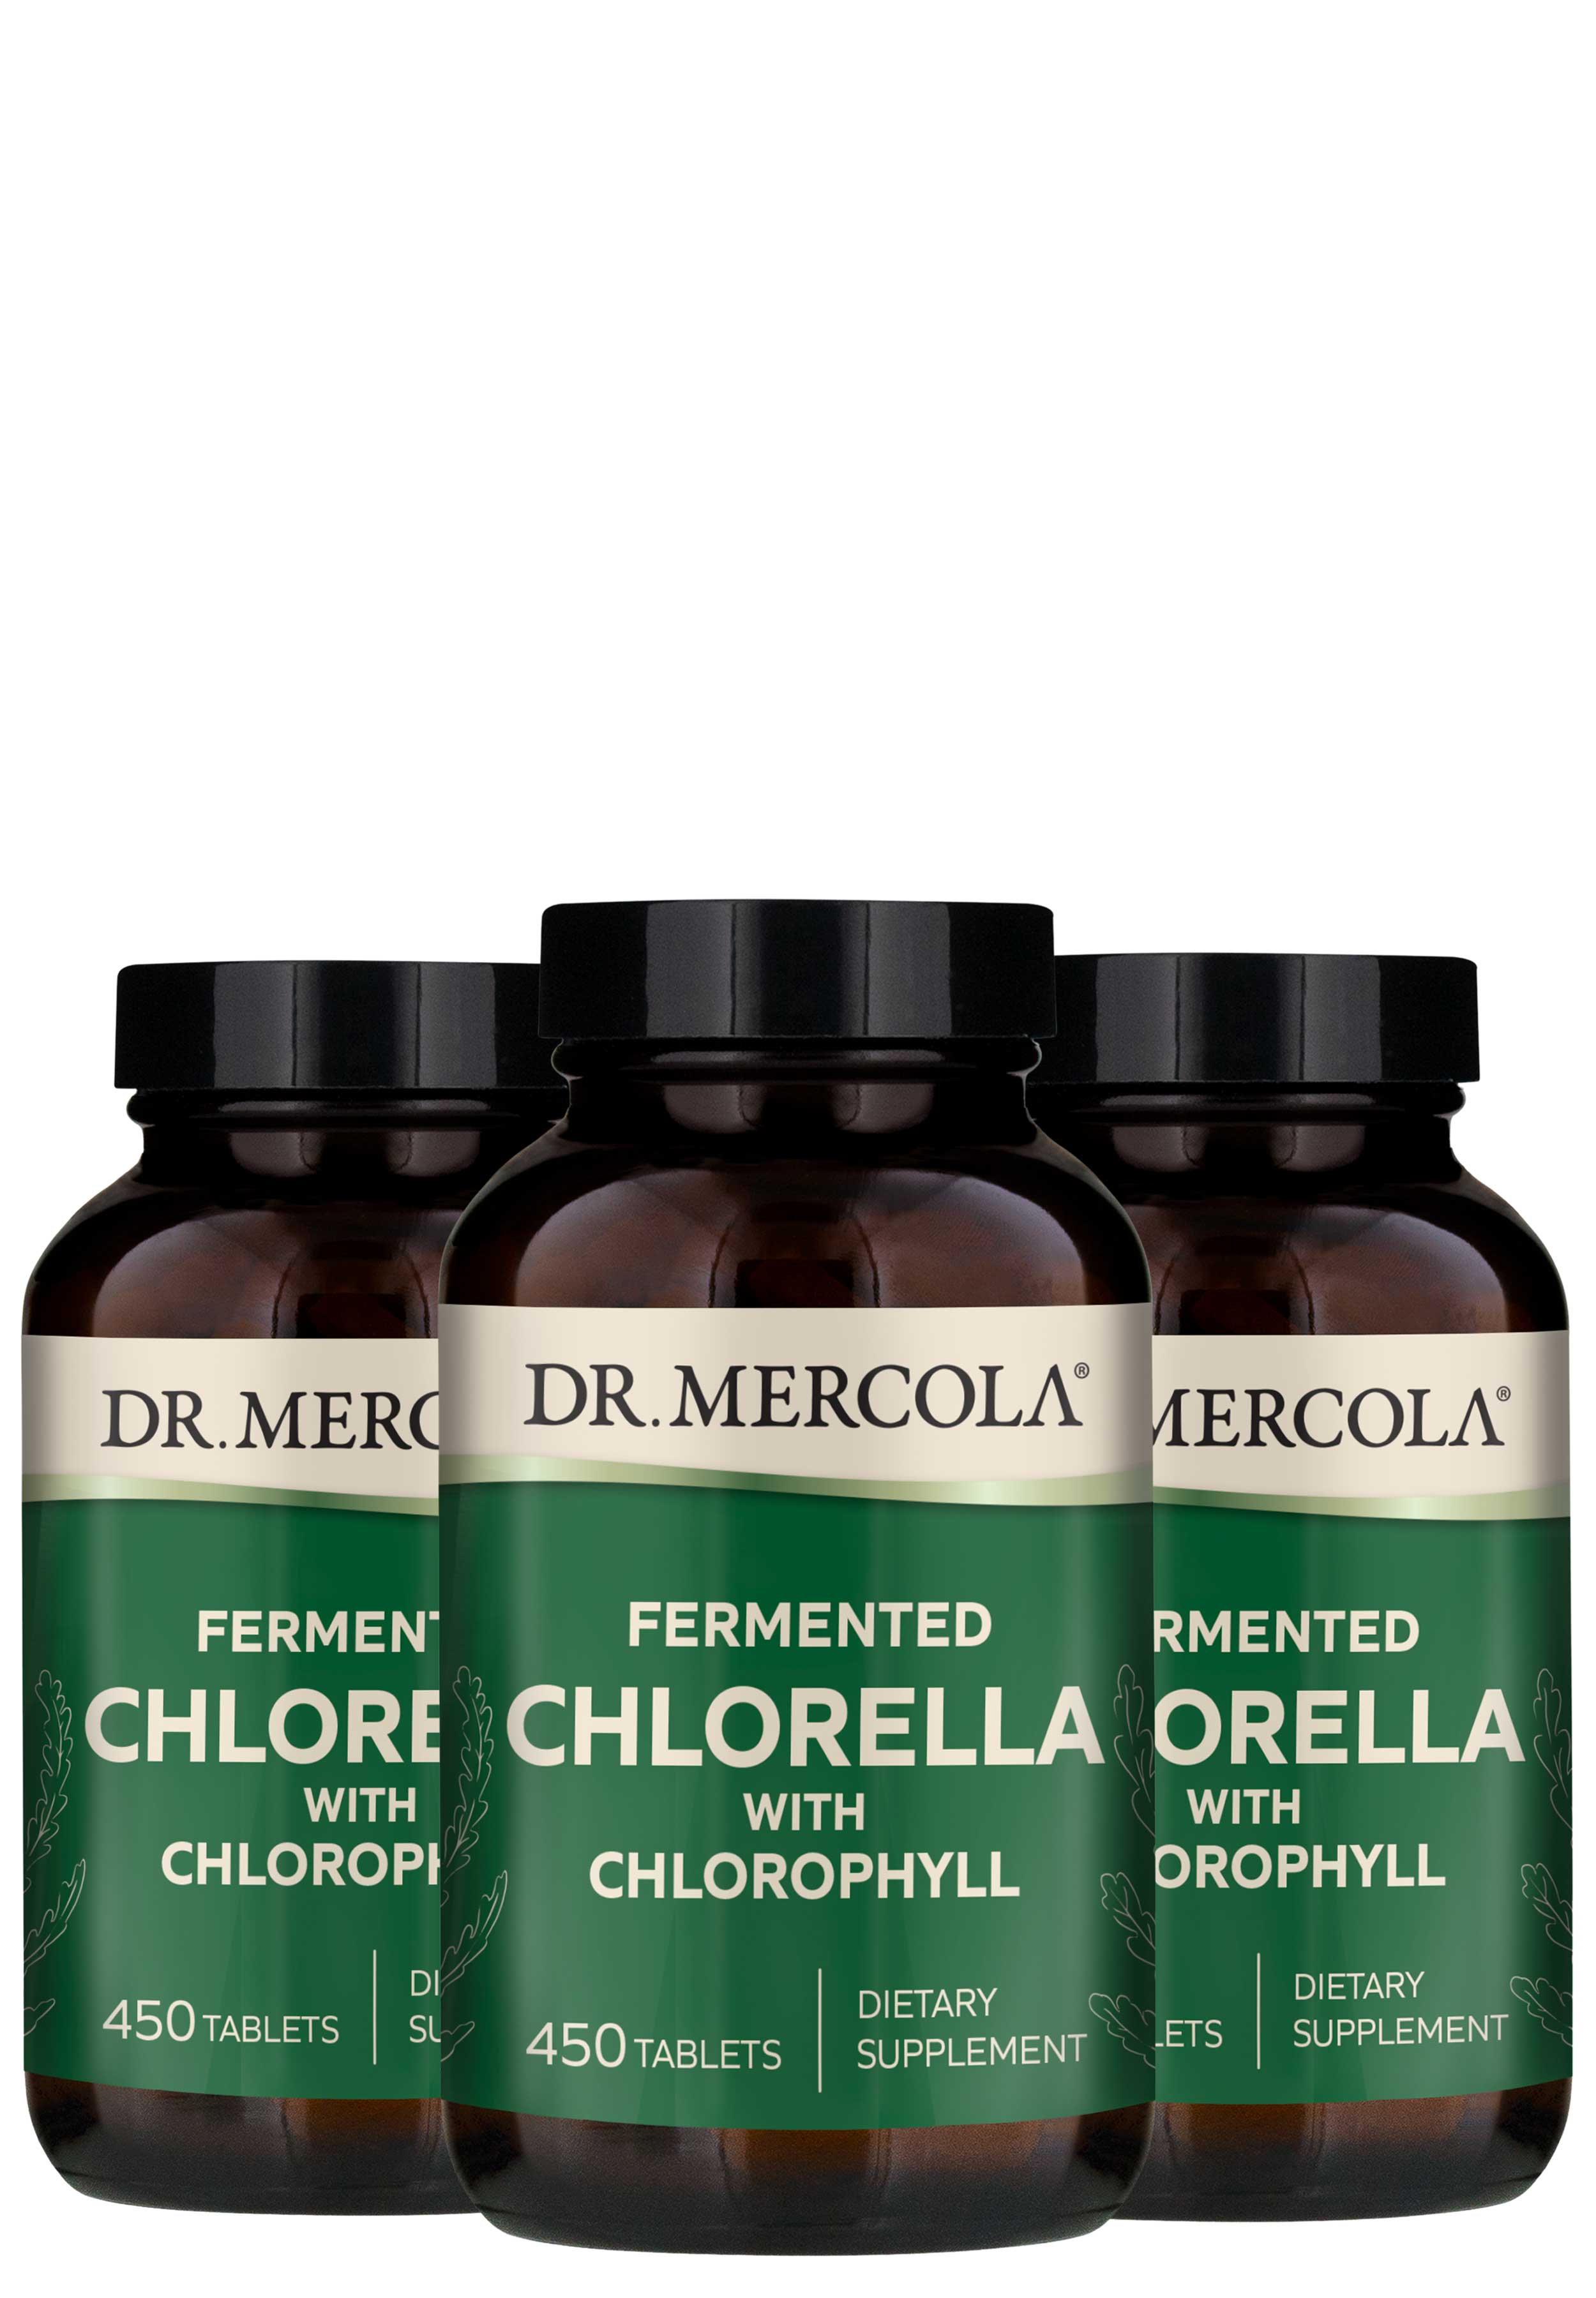 Dr. Mercola Fermented Chlorella